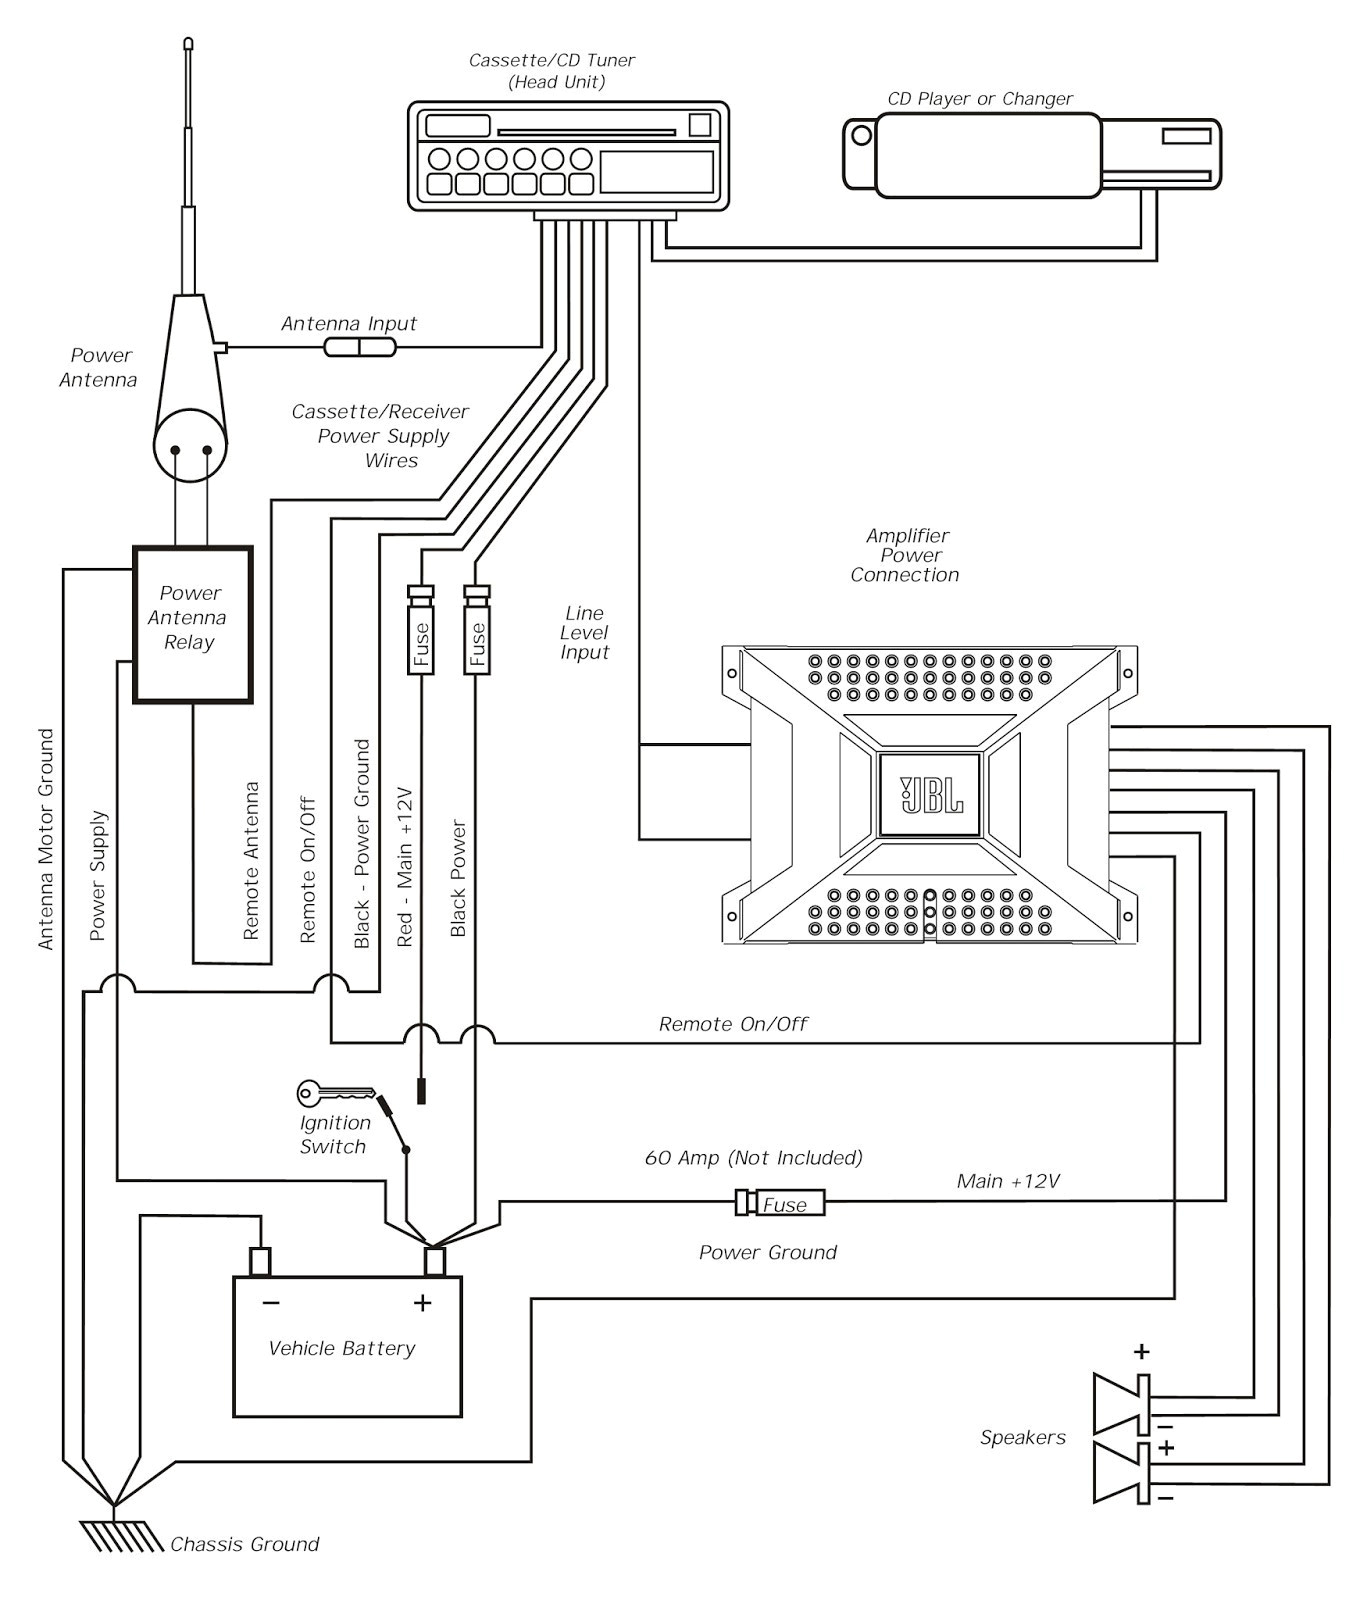 3 speaker wiring diagram new clr mic jack wiring u2013 electrical wiringclr mic jack wiring